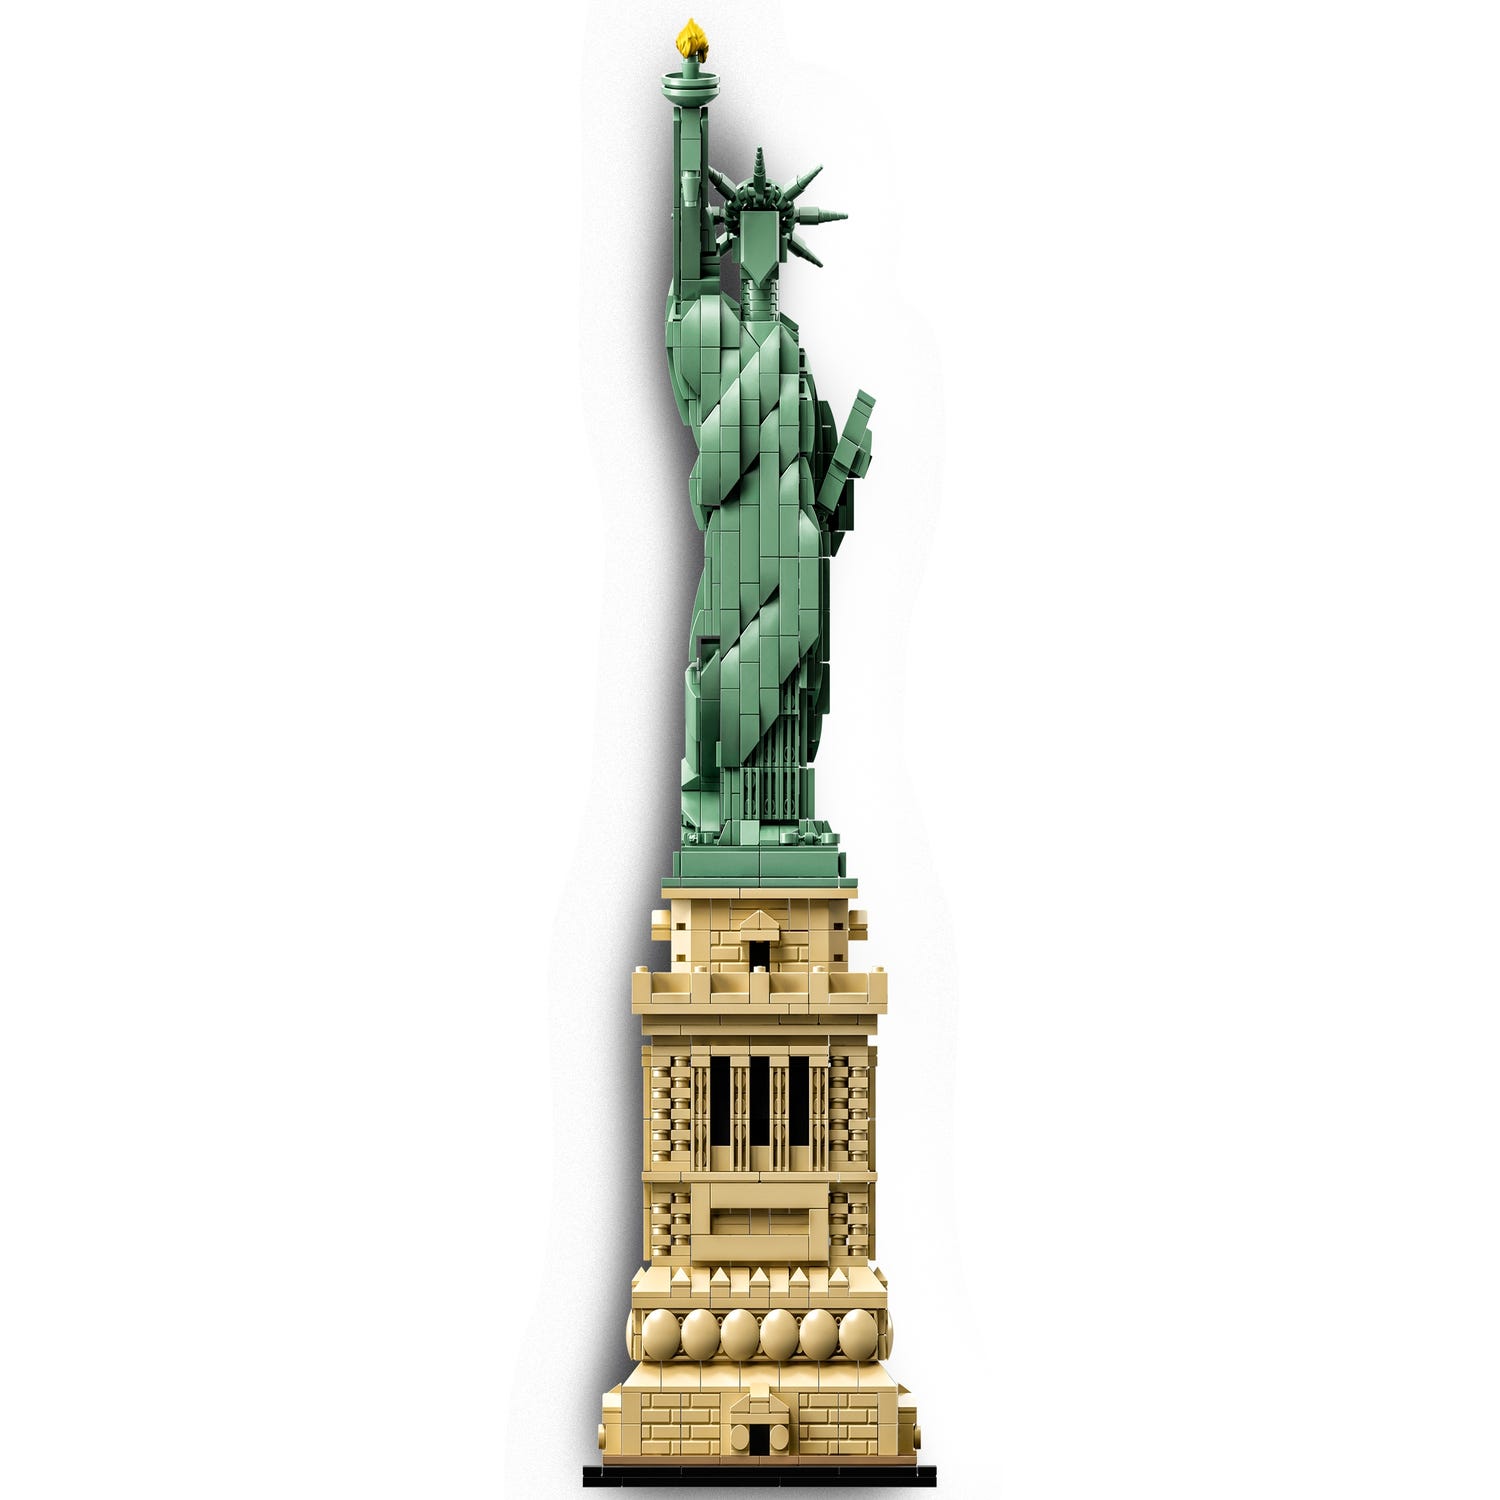 LEGO Architecture: Statue of Liberty (21042)